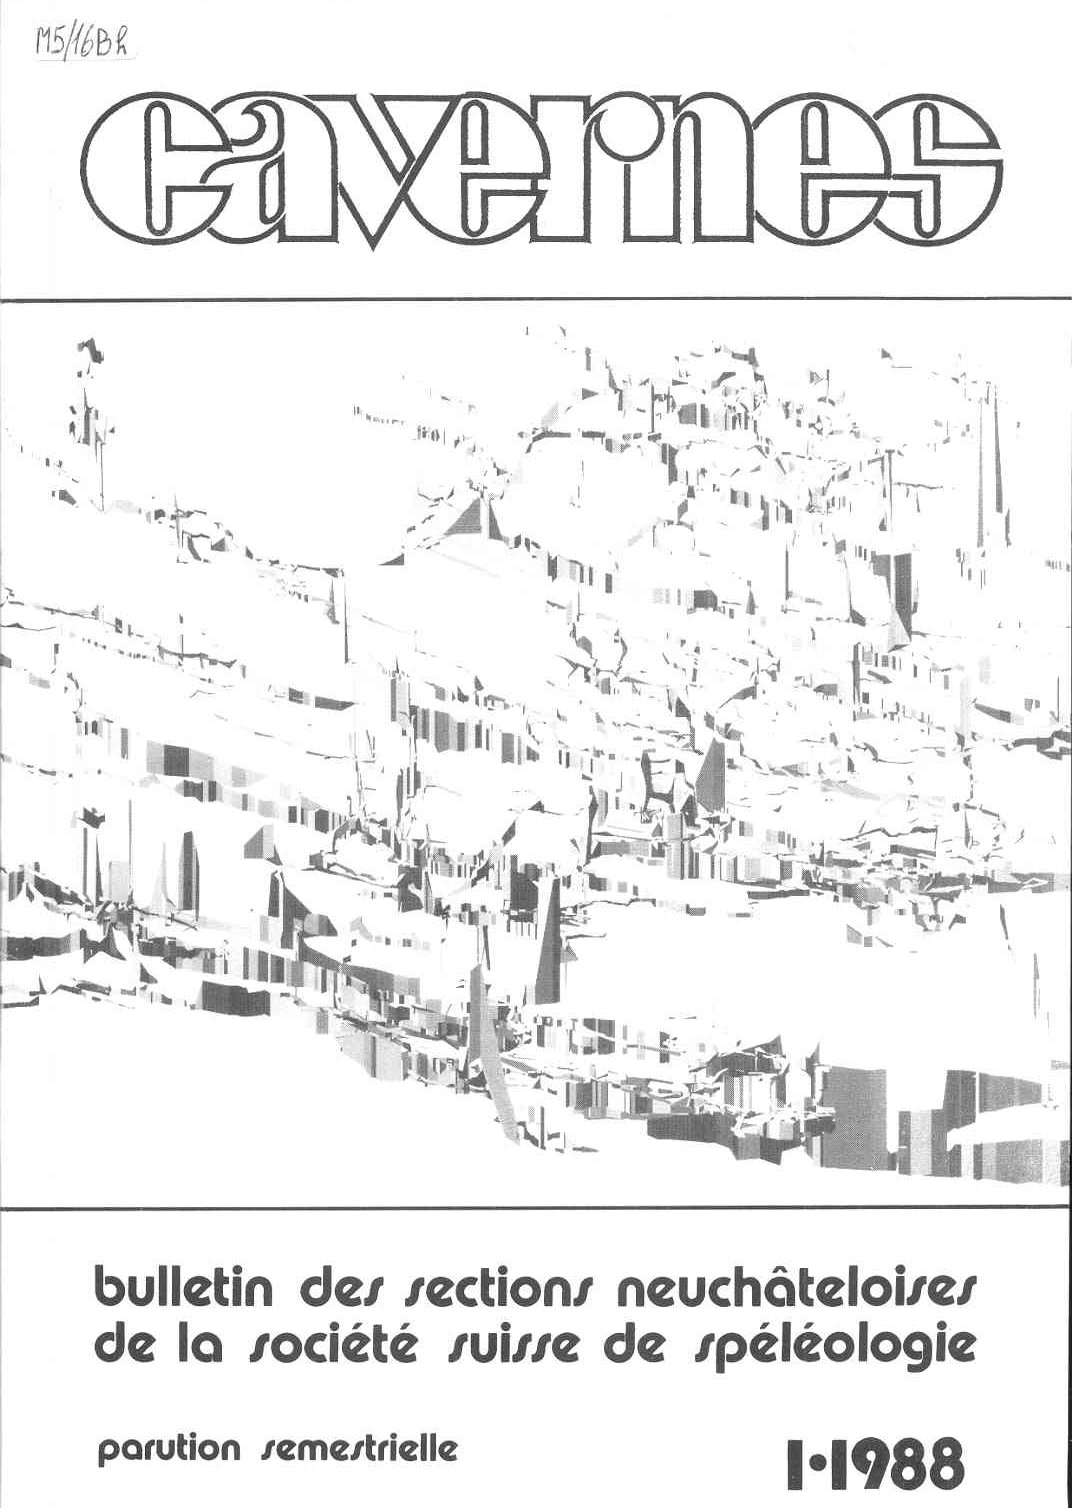 Cavernes/copertina anno 1988 n°1 e 2.jpg